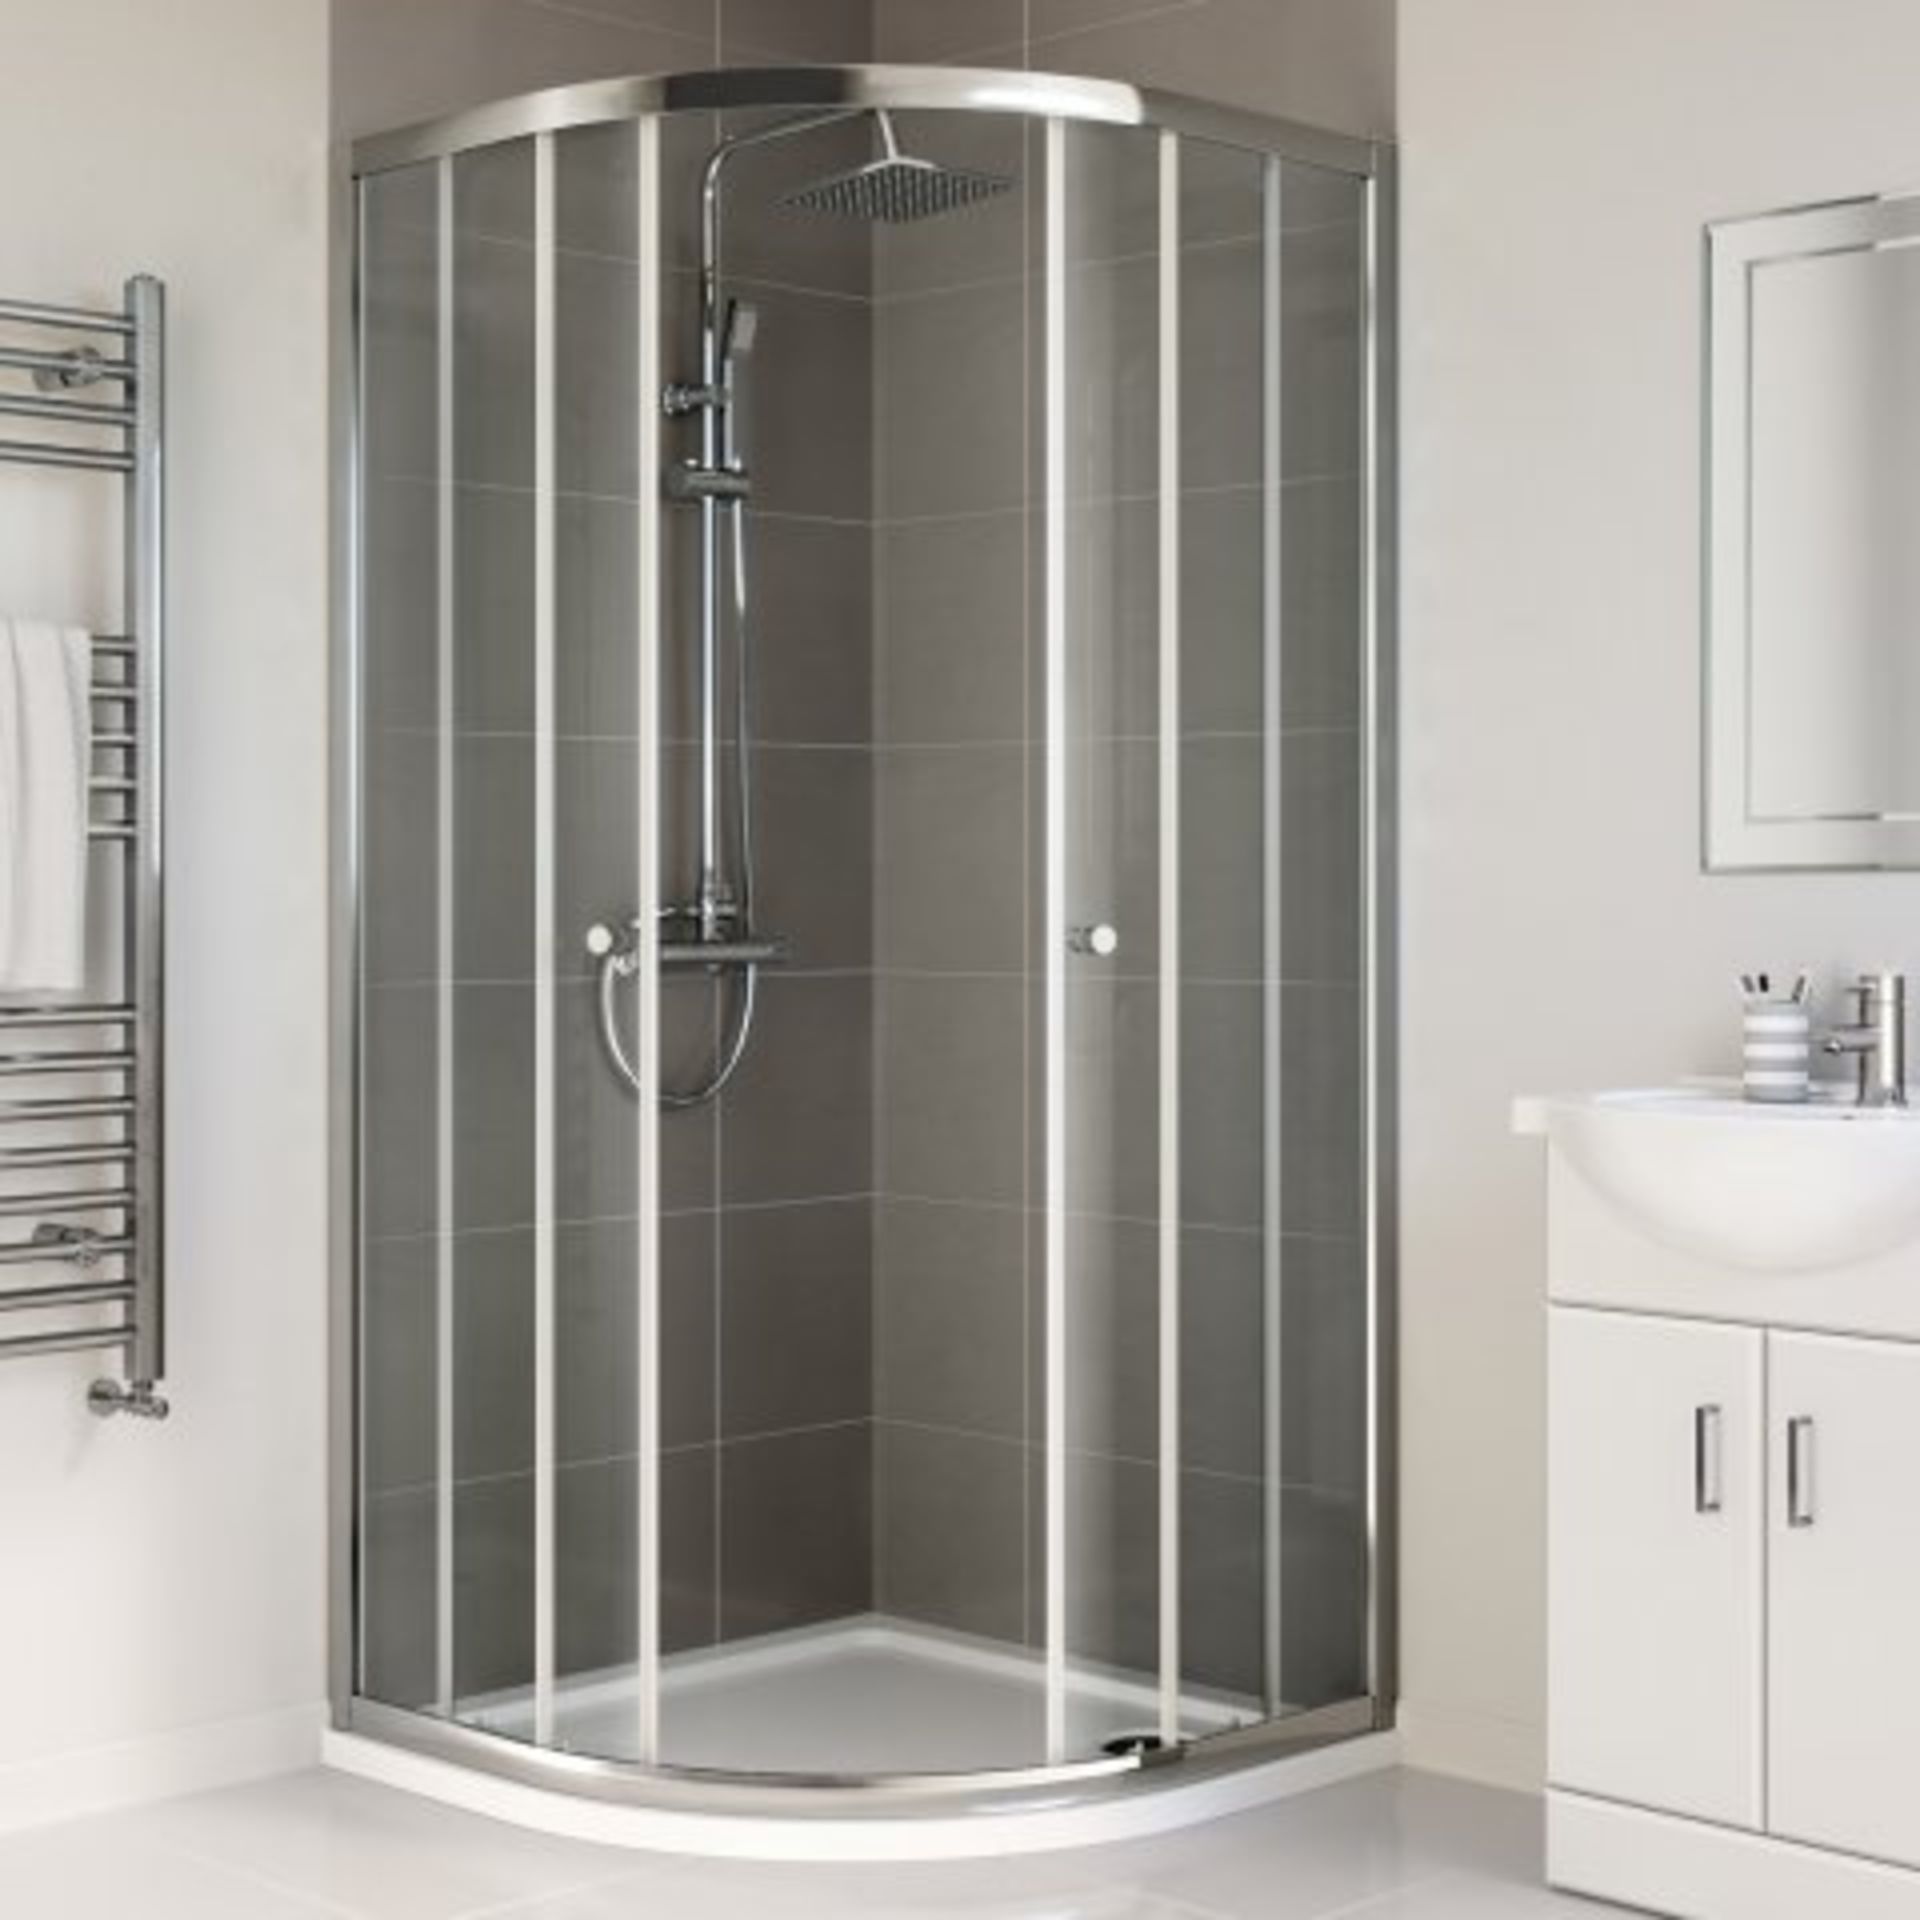 (P263) 900x900mm - Elements Quadrant Shower Enclosure. RRP £299.99. Budget Solution Our entry - Image 2 of 5